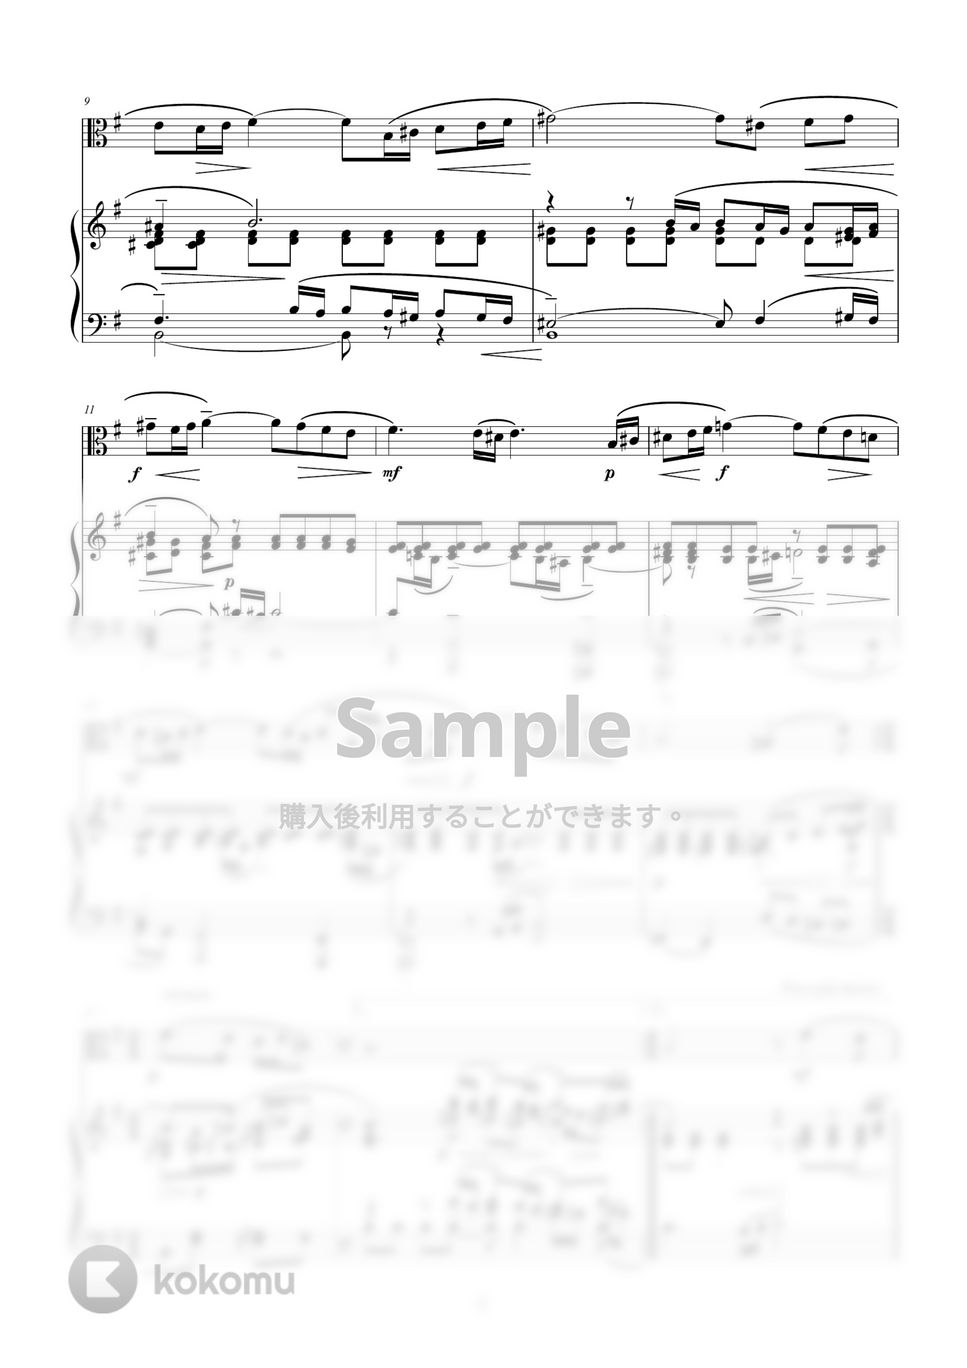 Rachmaninoff - Vocalise Op.34,No.14 / for Viola and Piano (ピアノ/ヴィオラ/ビオラ/ヴォカリーズ/ラフマニノフ) by Zoe